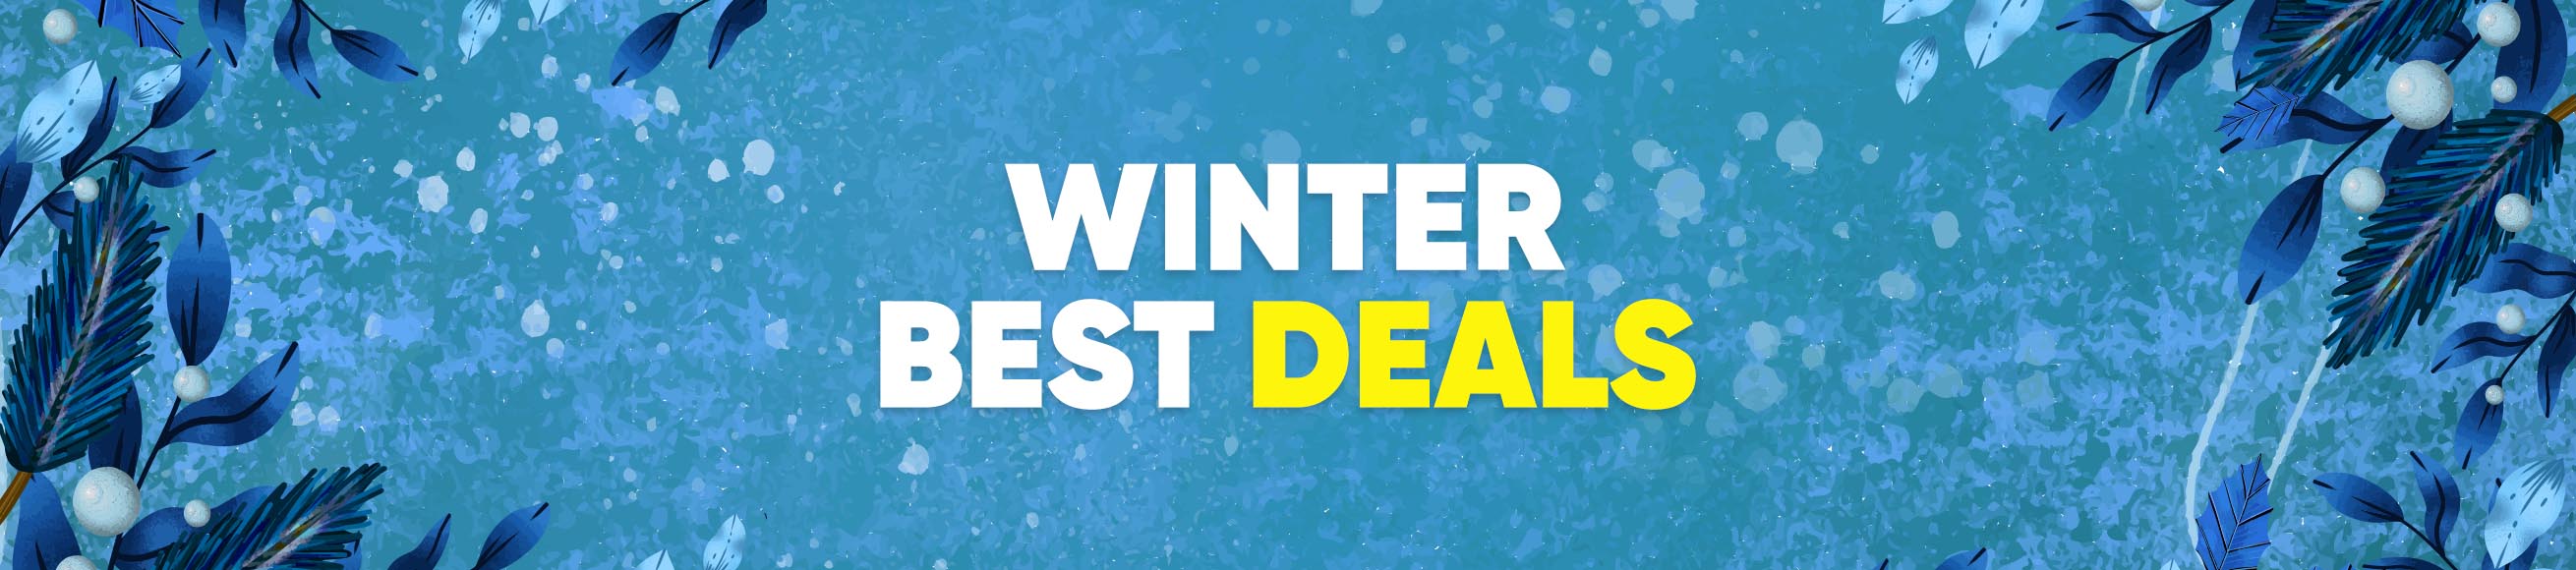 Winter Care Best Offers & Deals